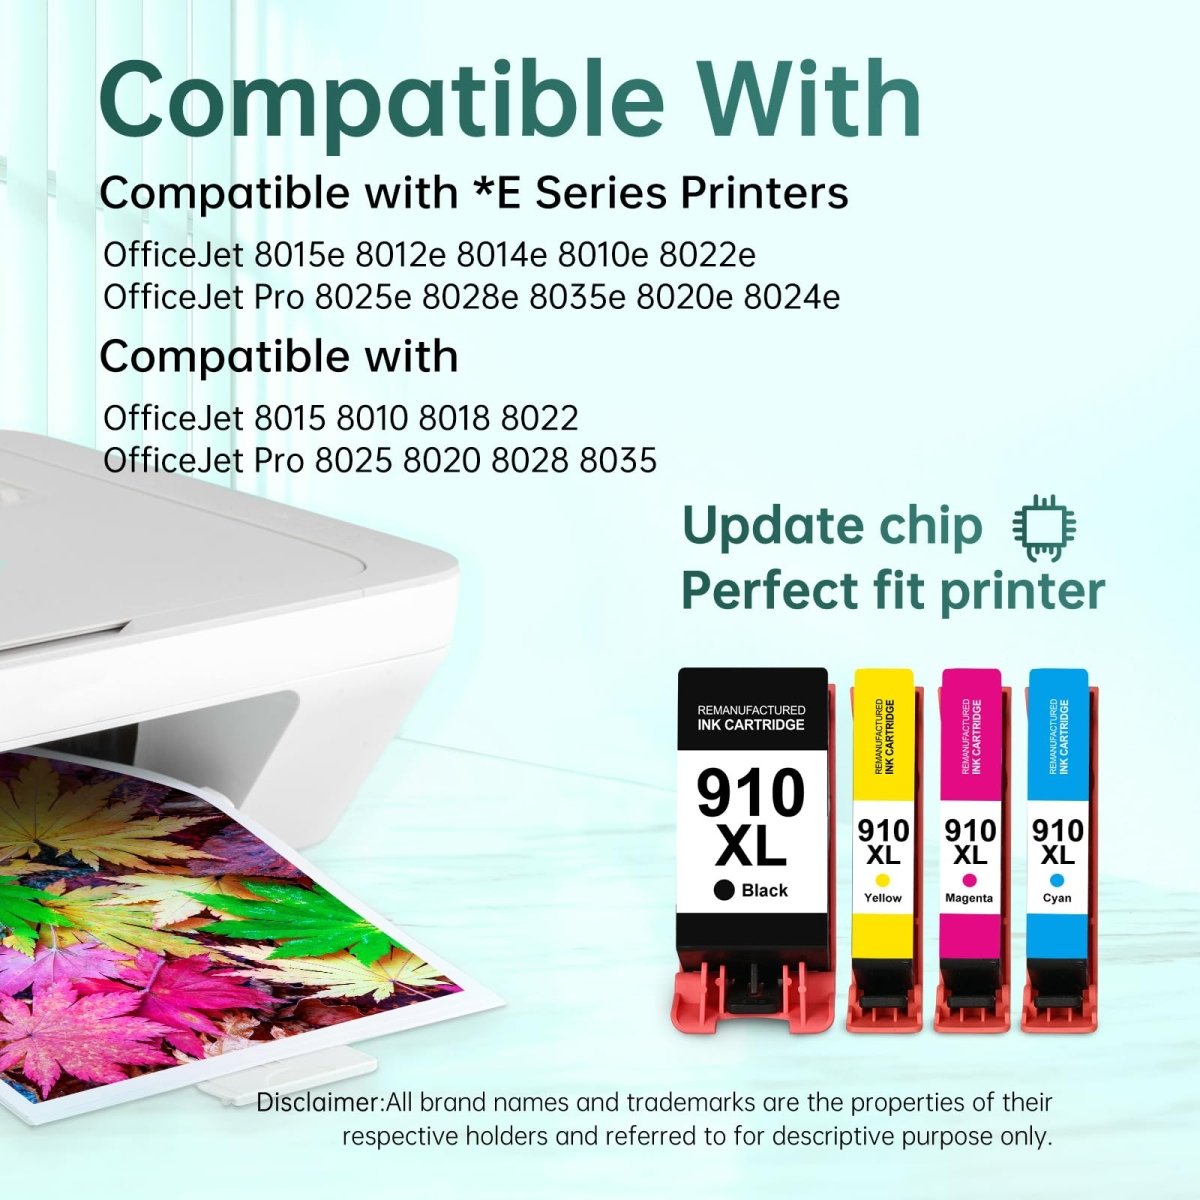 HP 910XL Black Ink Cartridge Compatible 2 Packs High Yield 3YL65AN - Linford Office:Printer Ink & Toner Cartridge